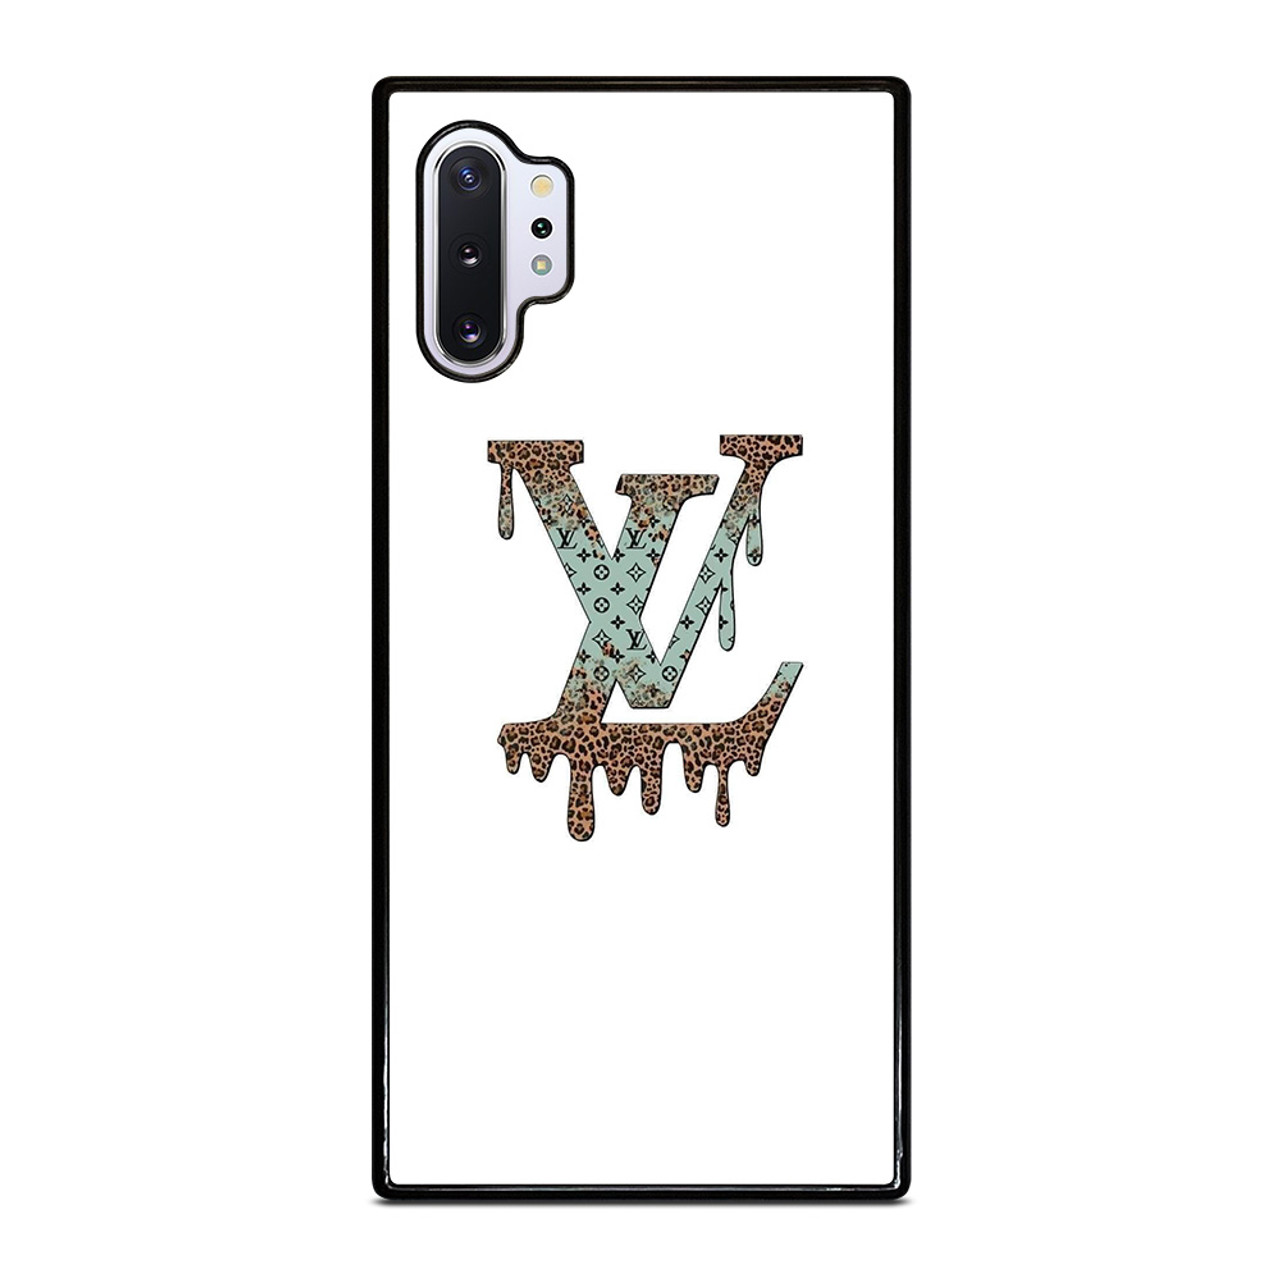 LOUIS VUITTON LV MELTING LOGO PATTERN iPhone 12 Case Cover